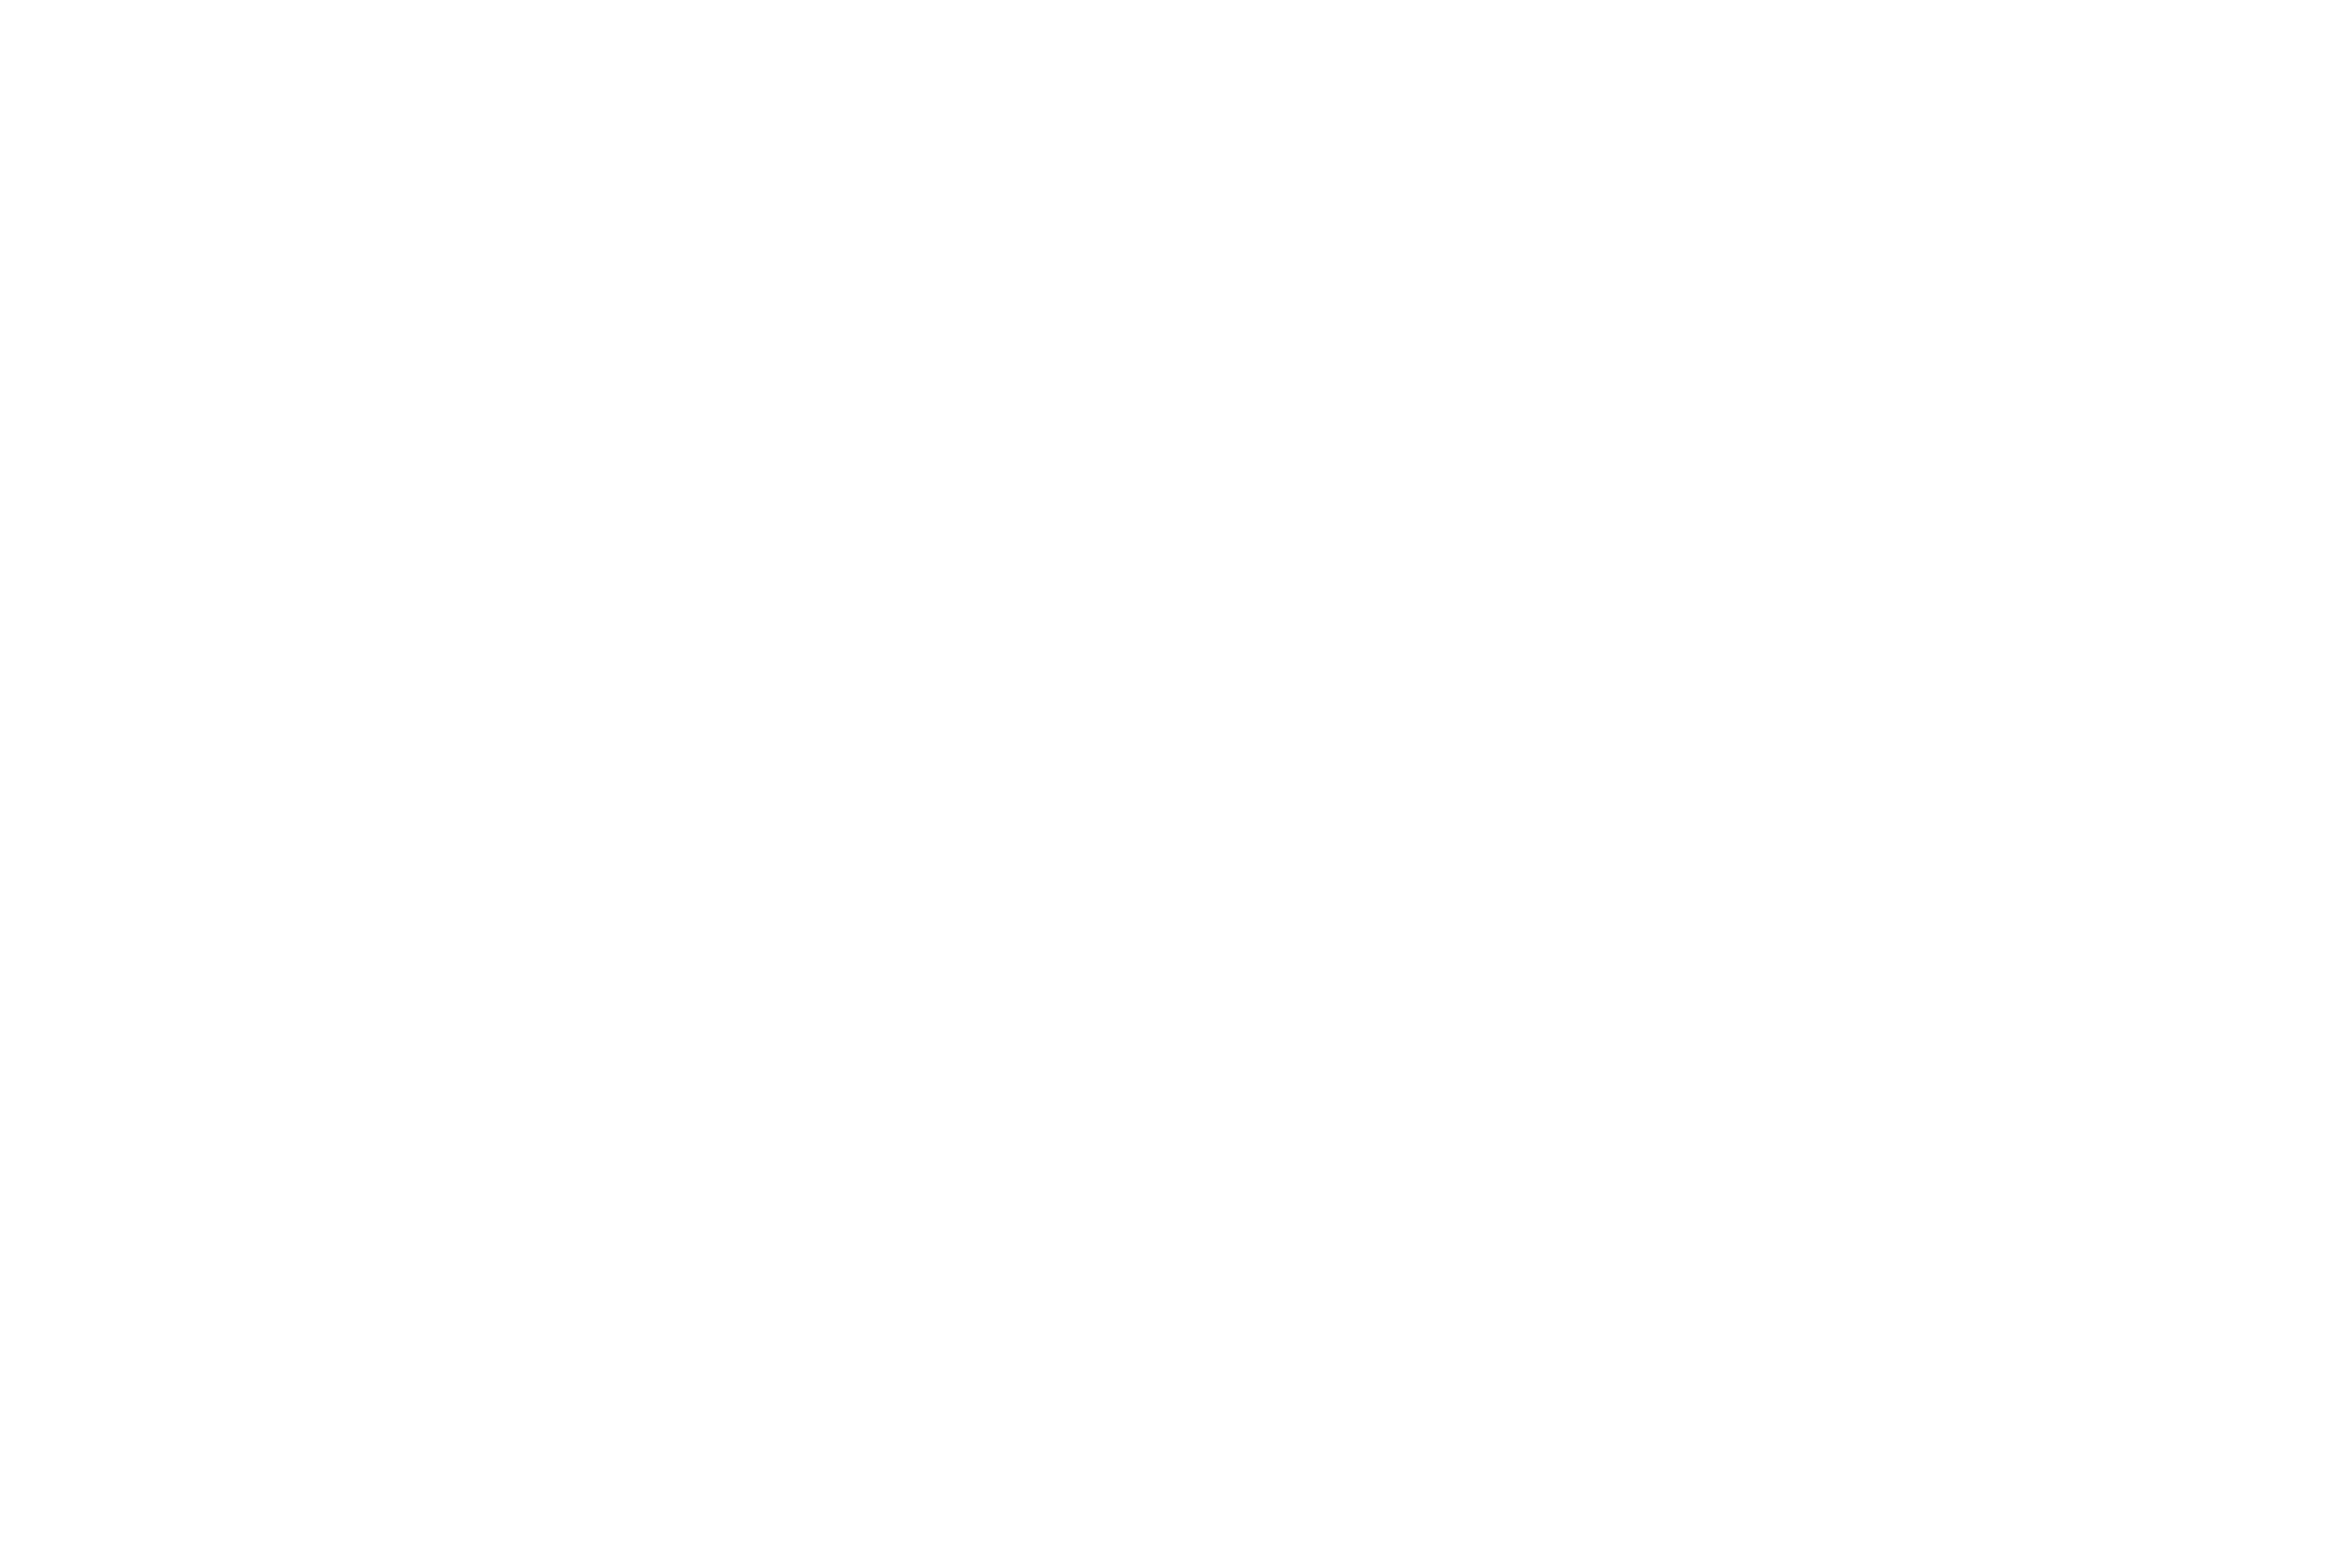 Aravis International Location